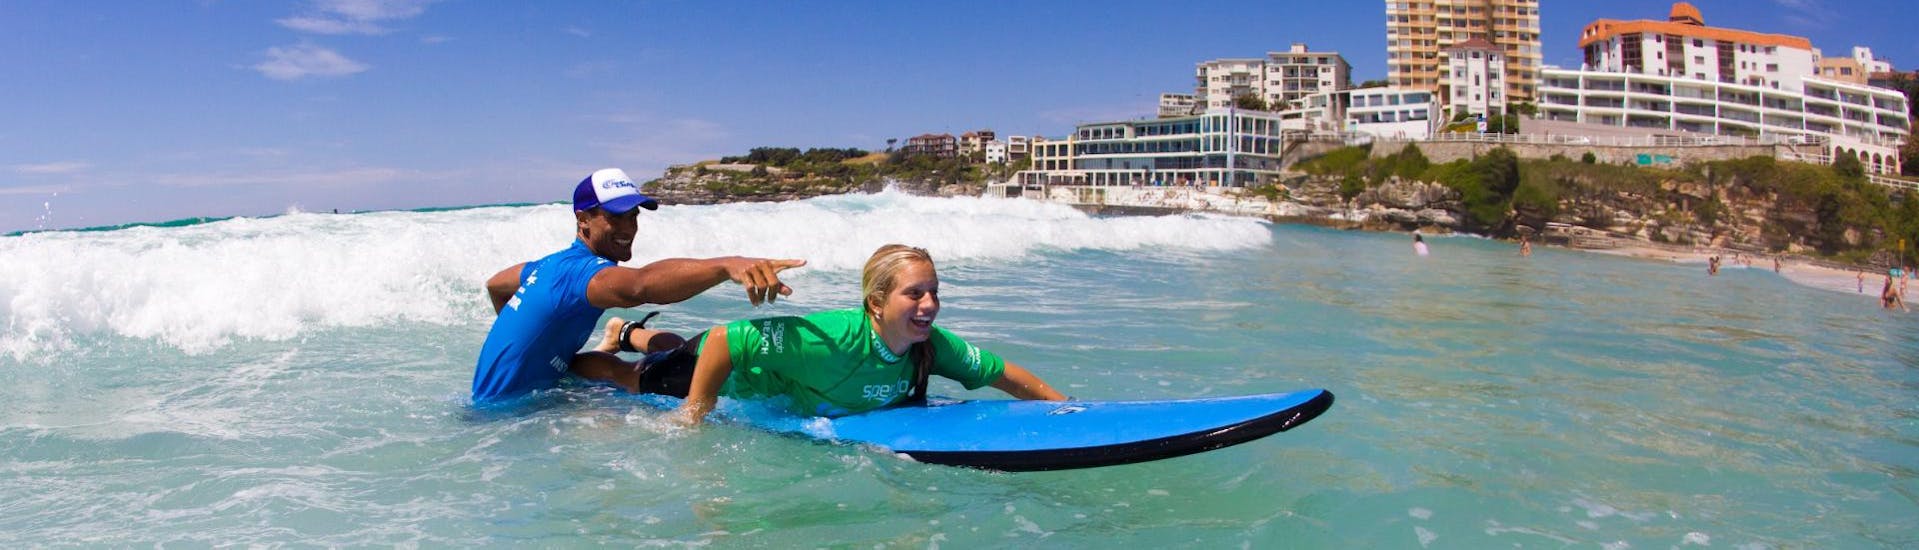 Curso de Surf en Bondi Beach a partir de 12 años para principiantes.